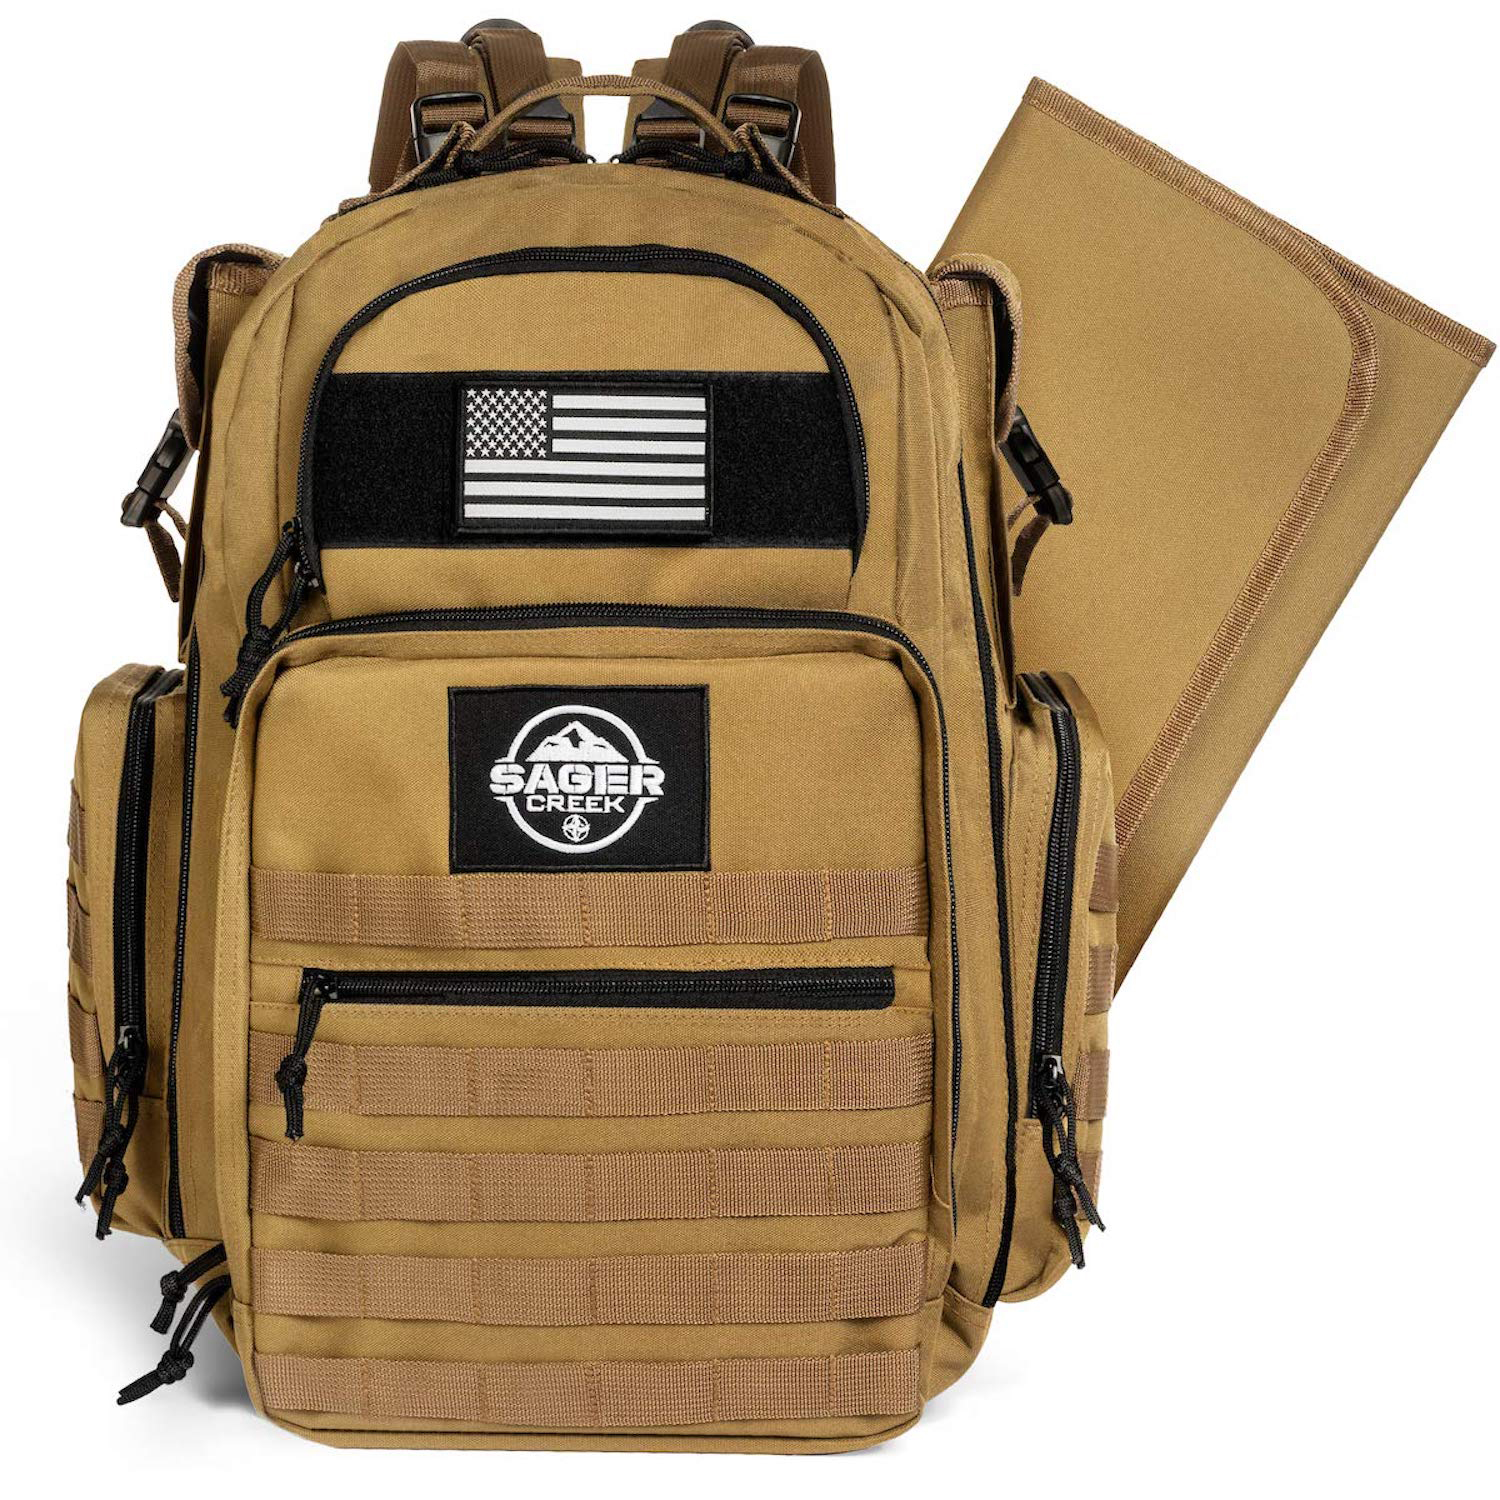 Sager Creek Military-Style Diaper Bag 